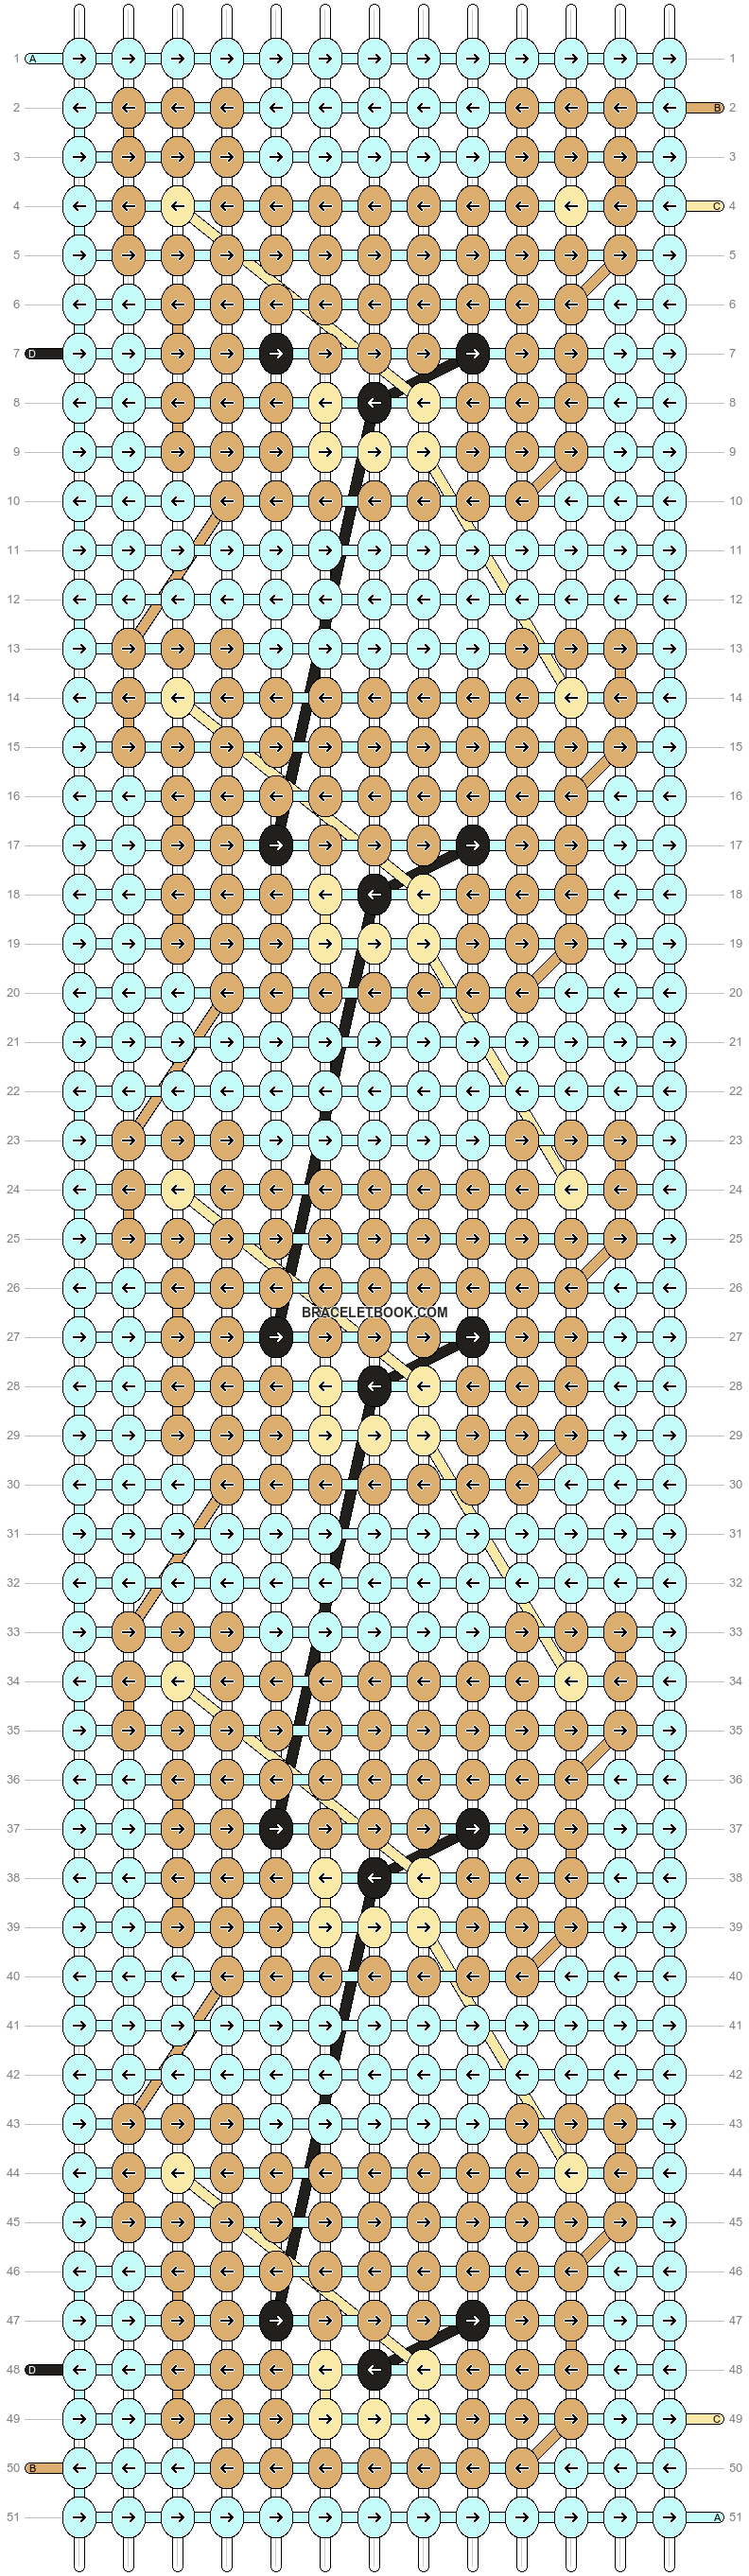 Alpha pattern #26680 variation #9202 pattern